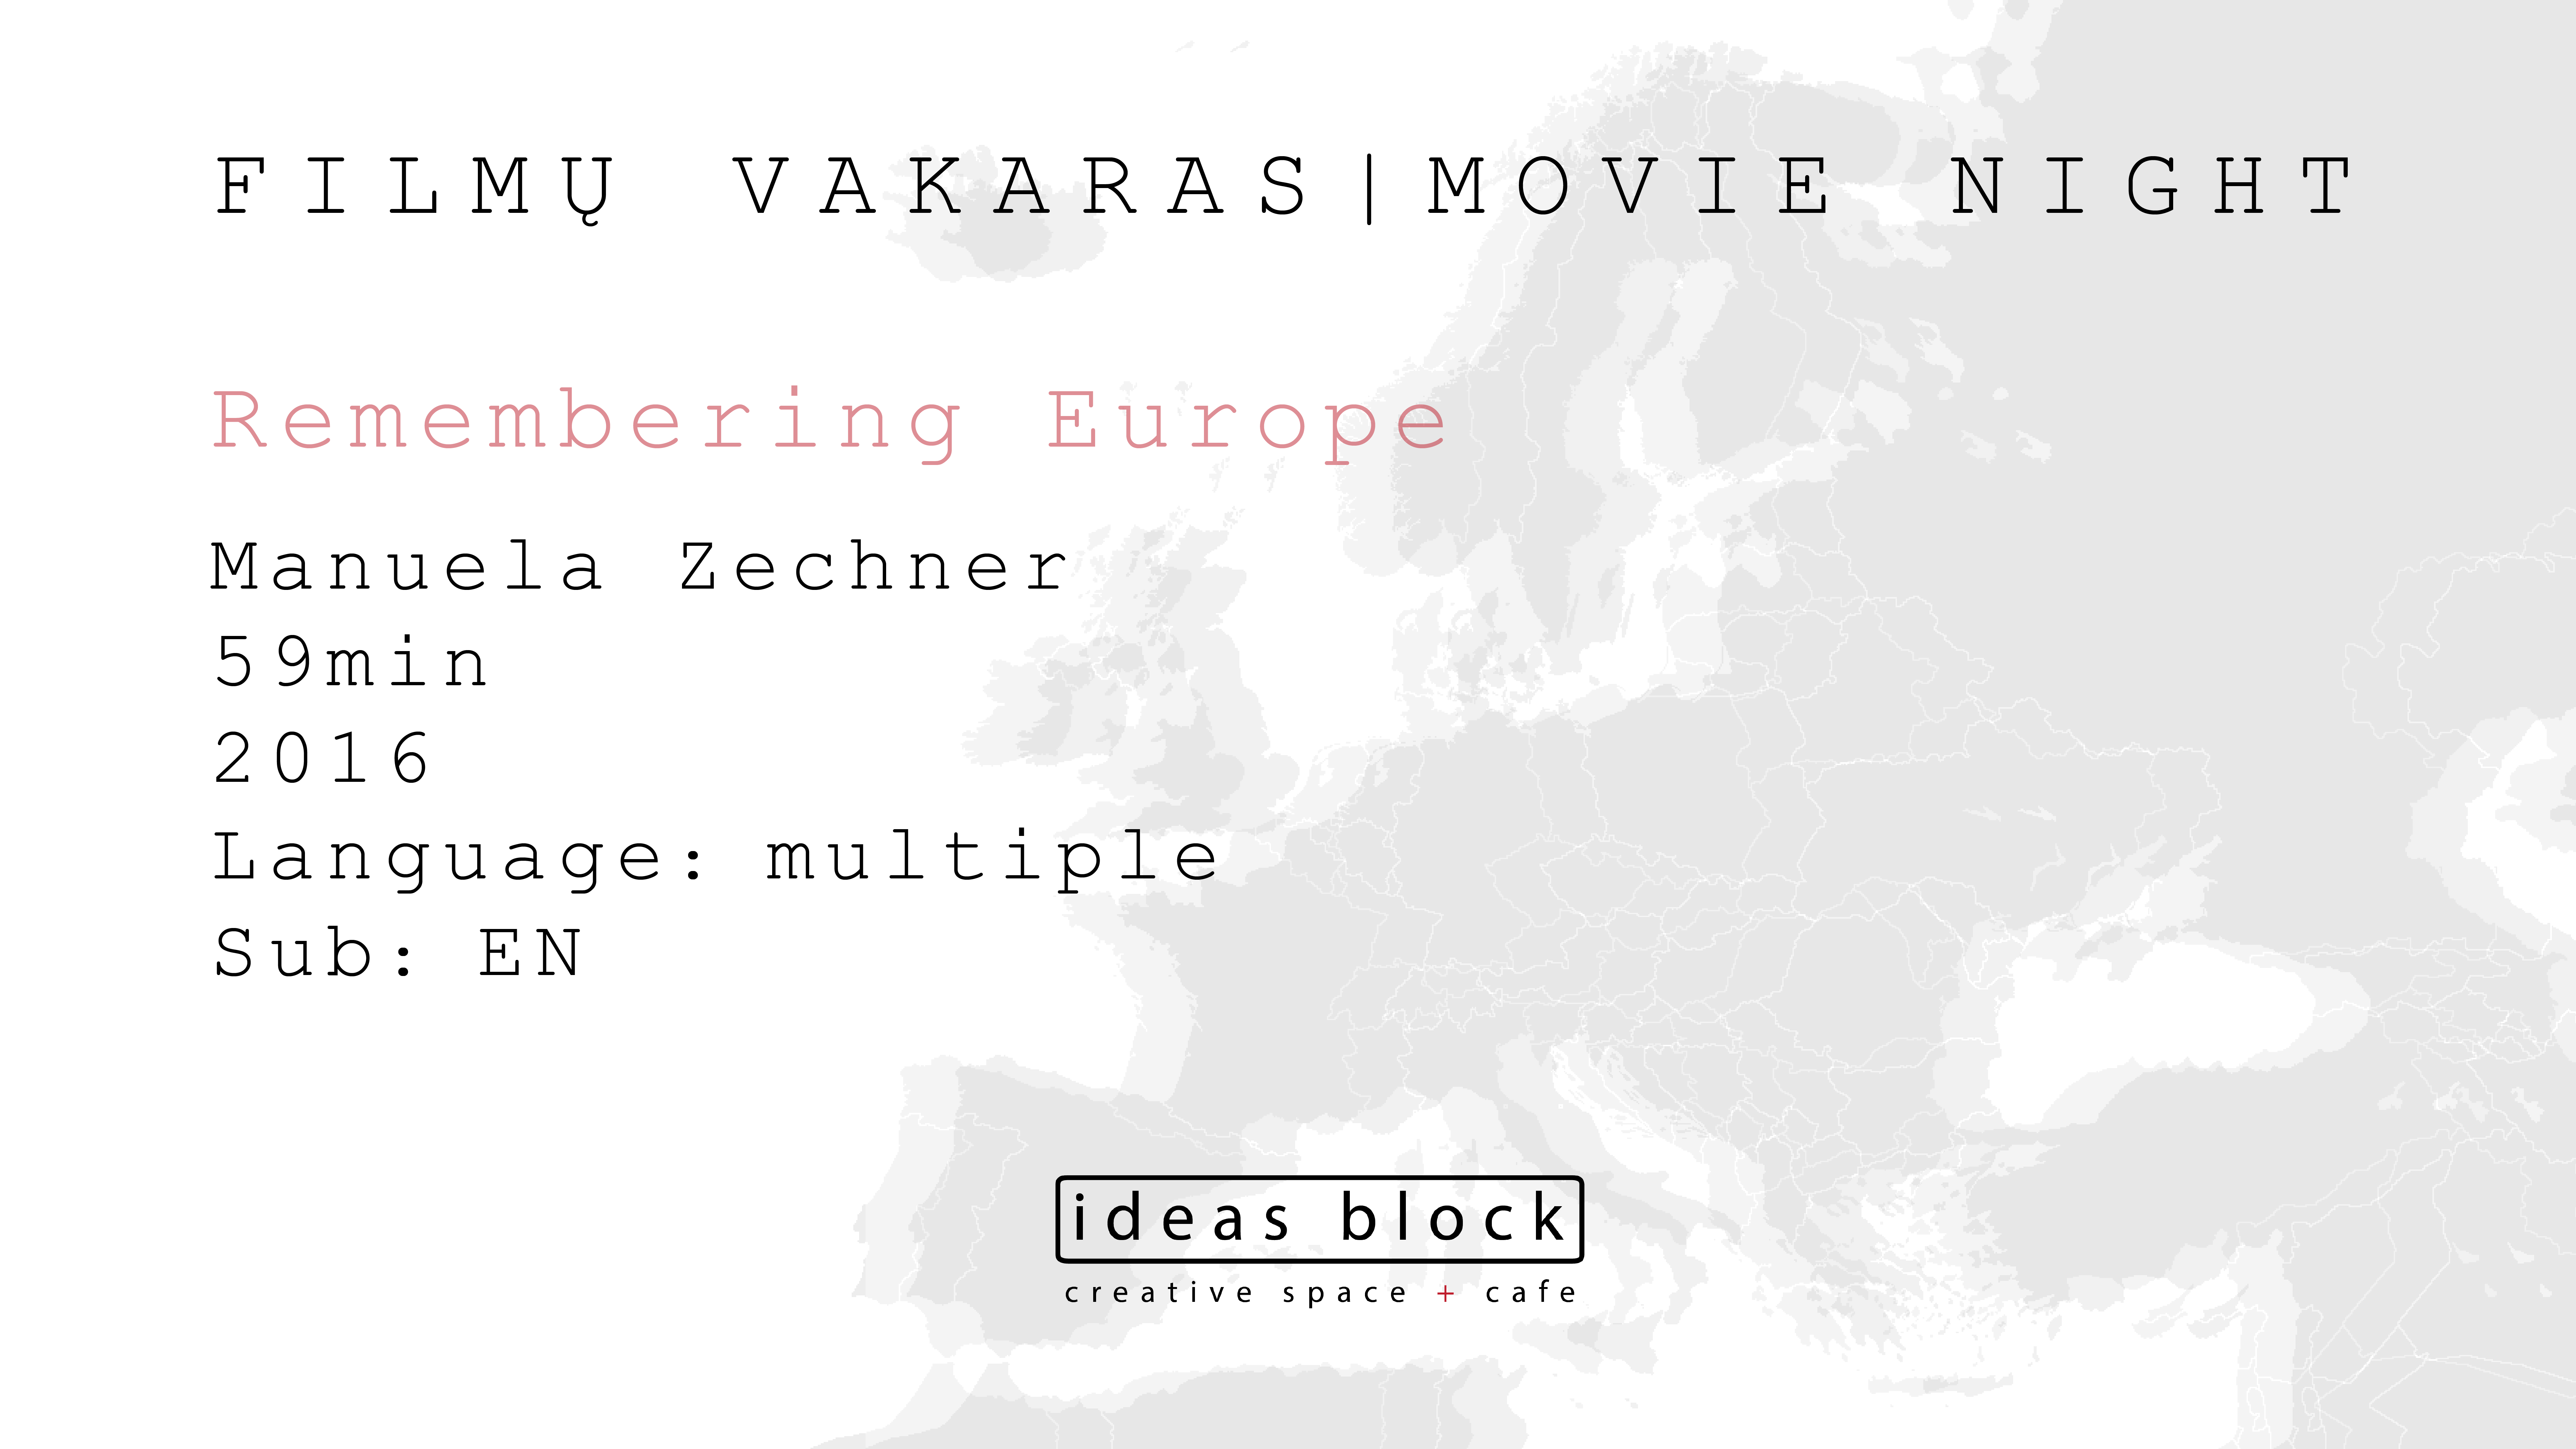 Movie night - Remembering Europe